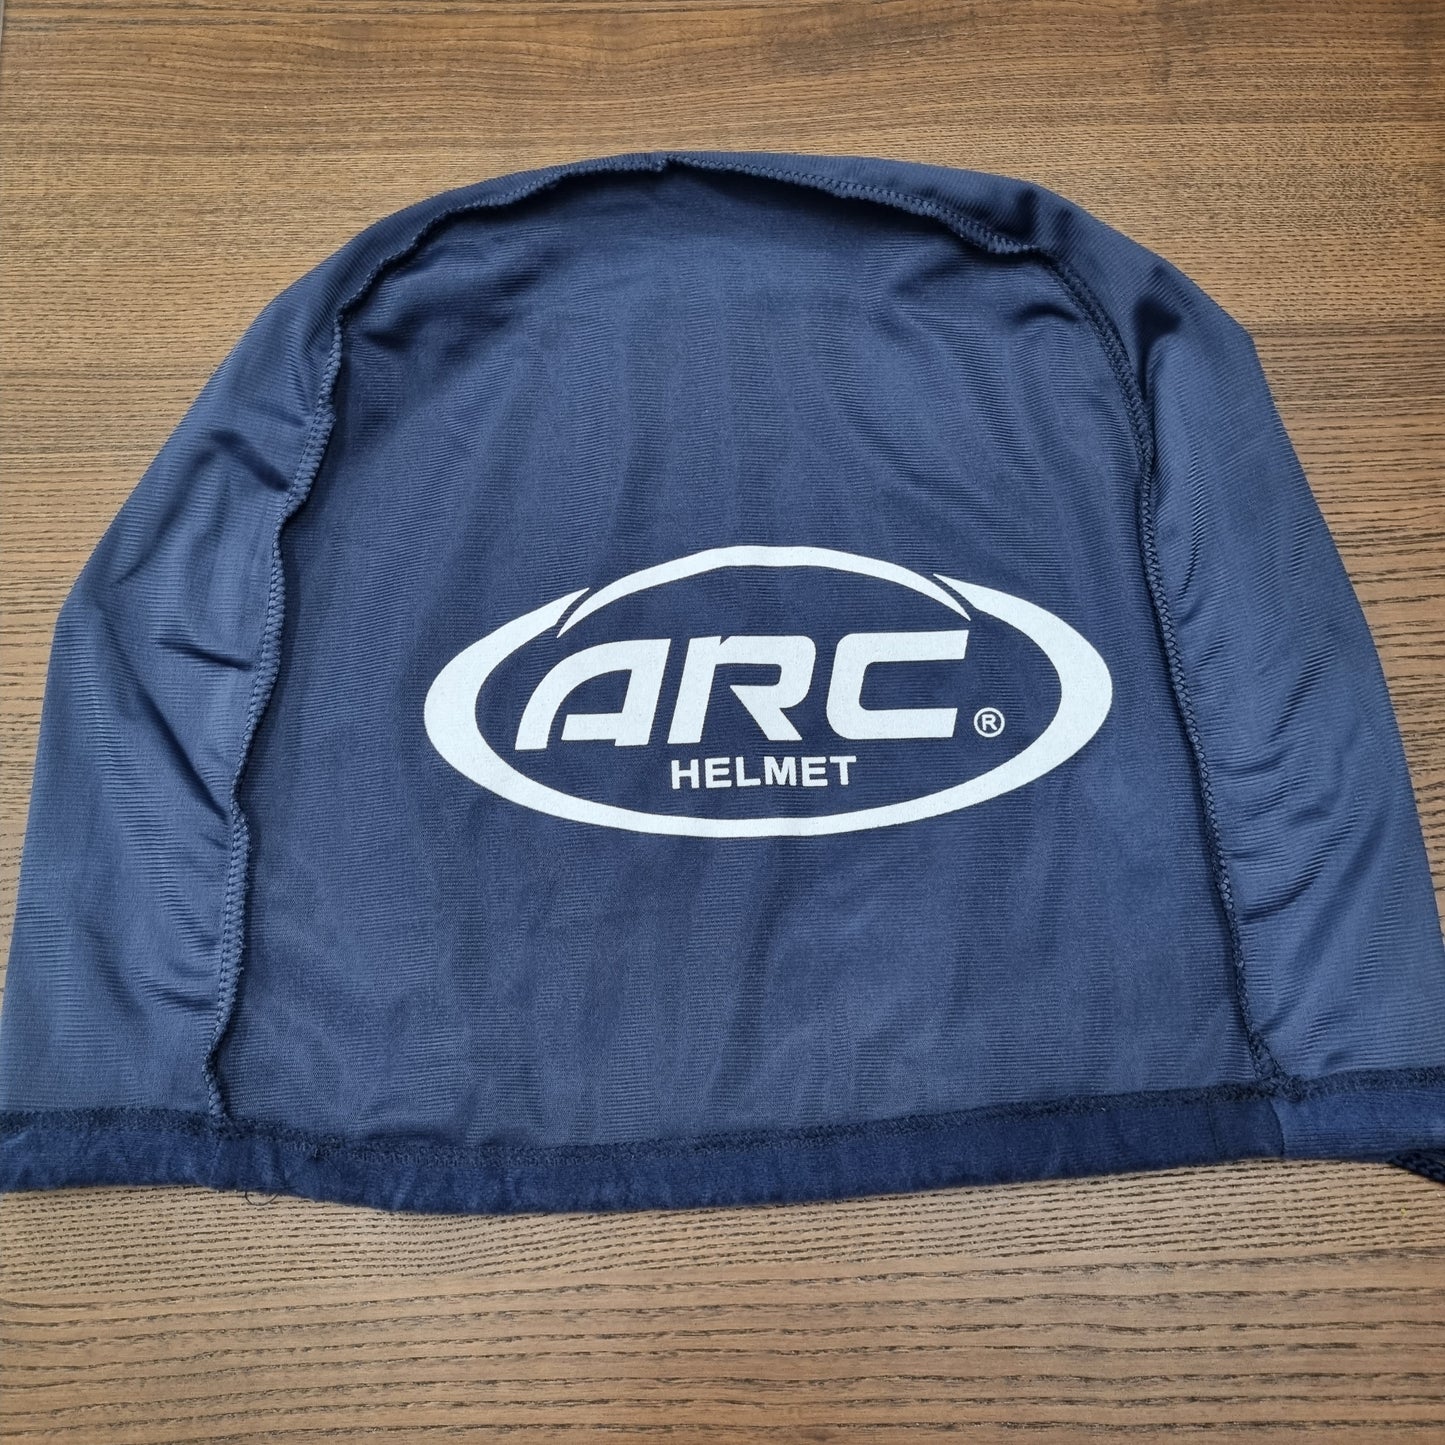 ARC helmet bag